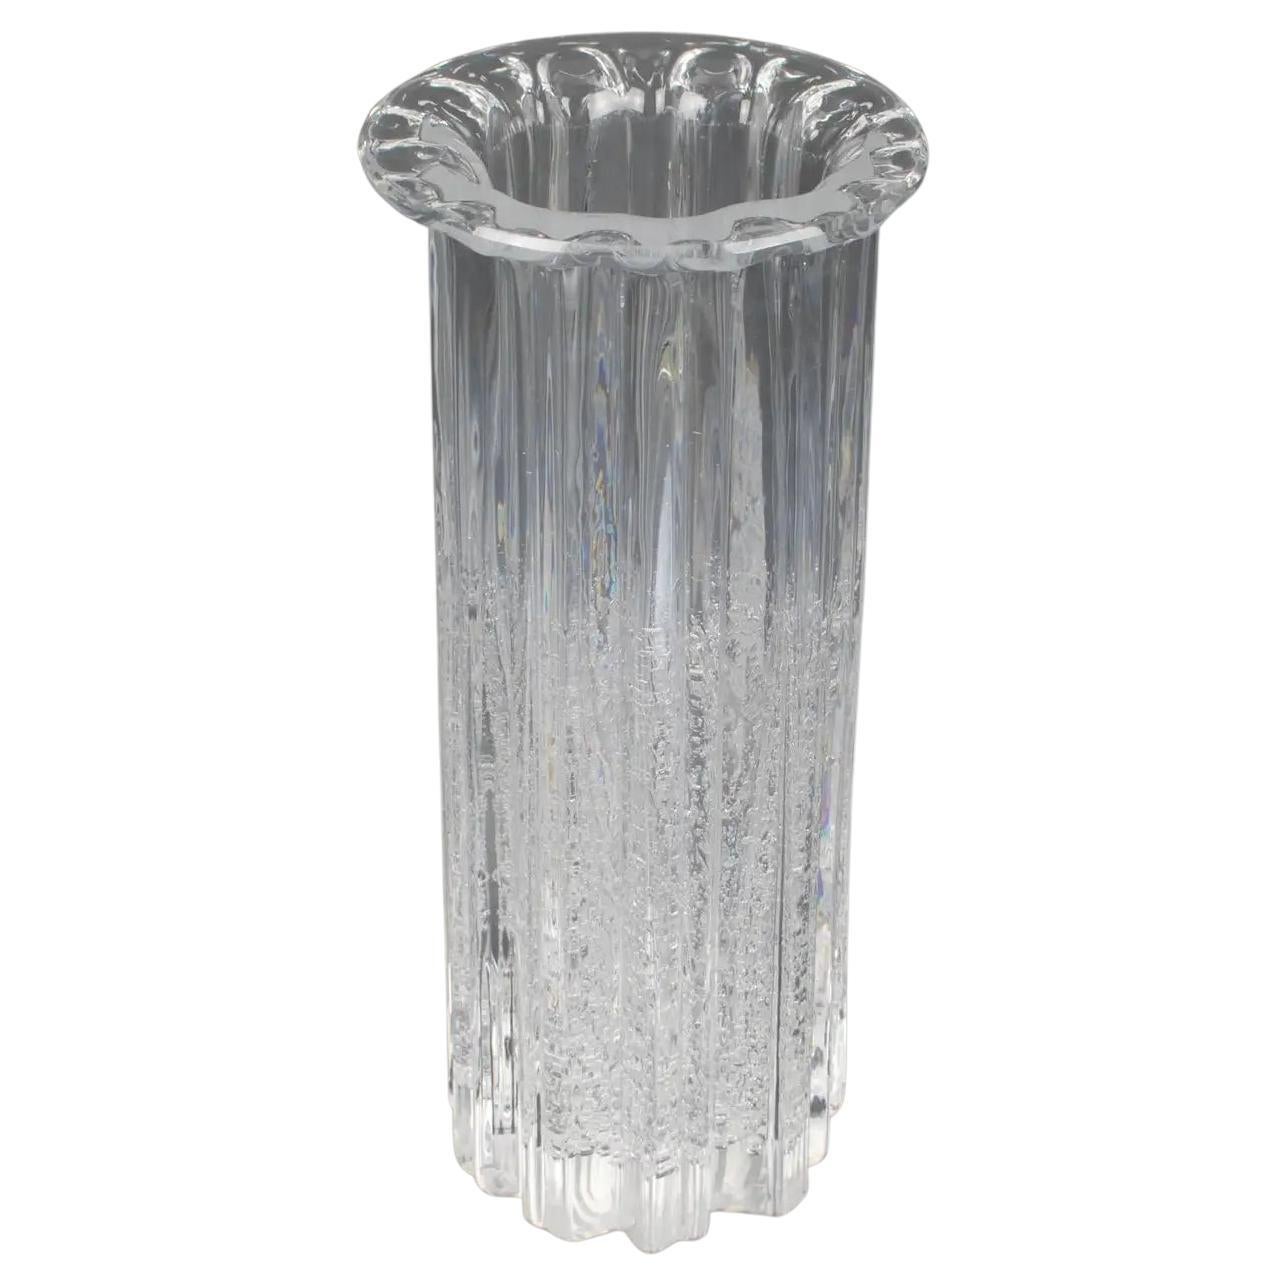 Willy Johansson for Hadeland Norway Art-Glass "Atlantic" Tall Vase